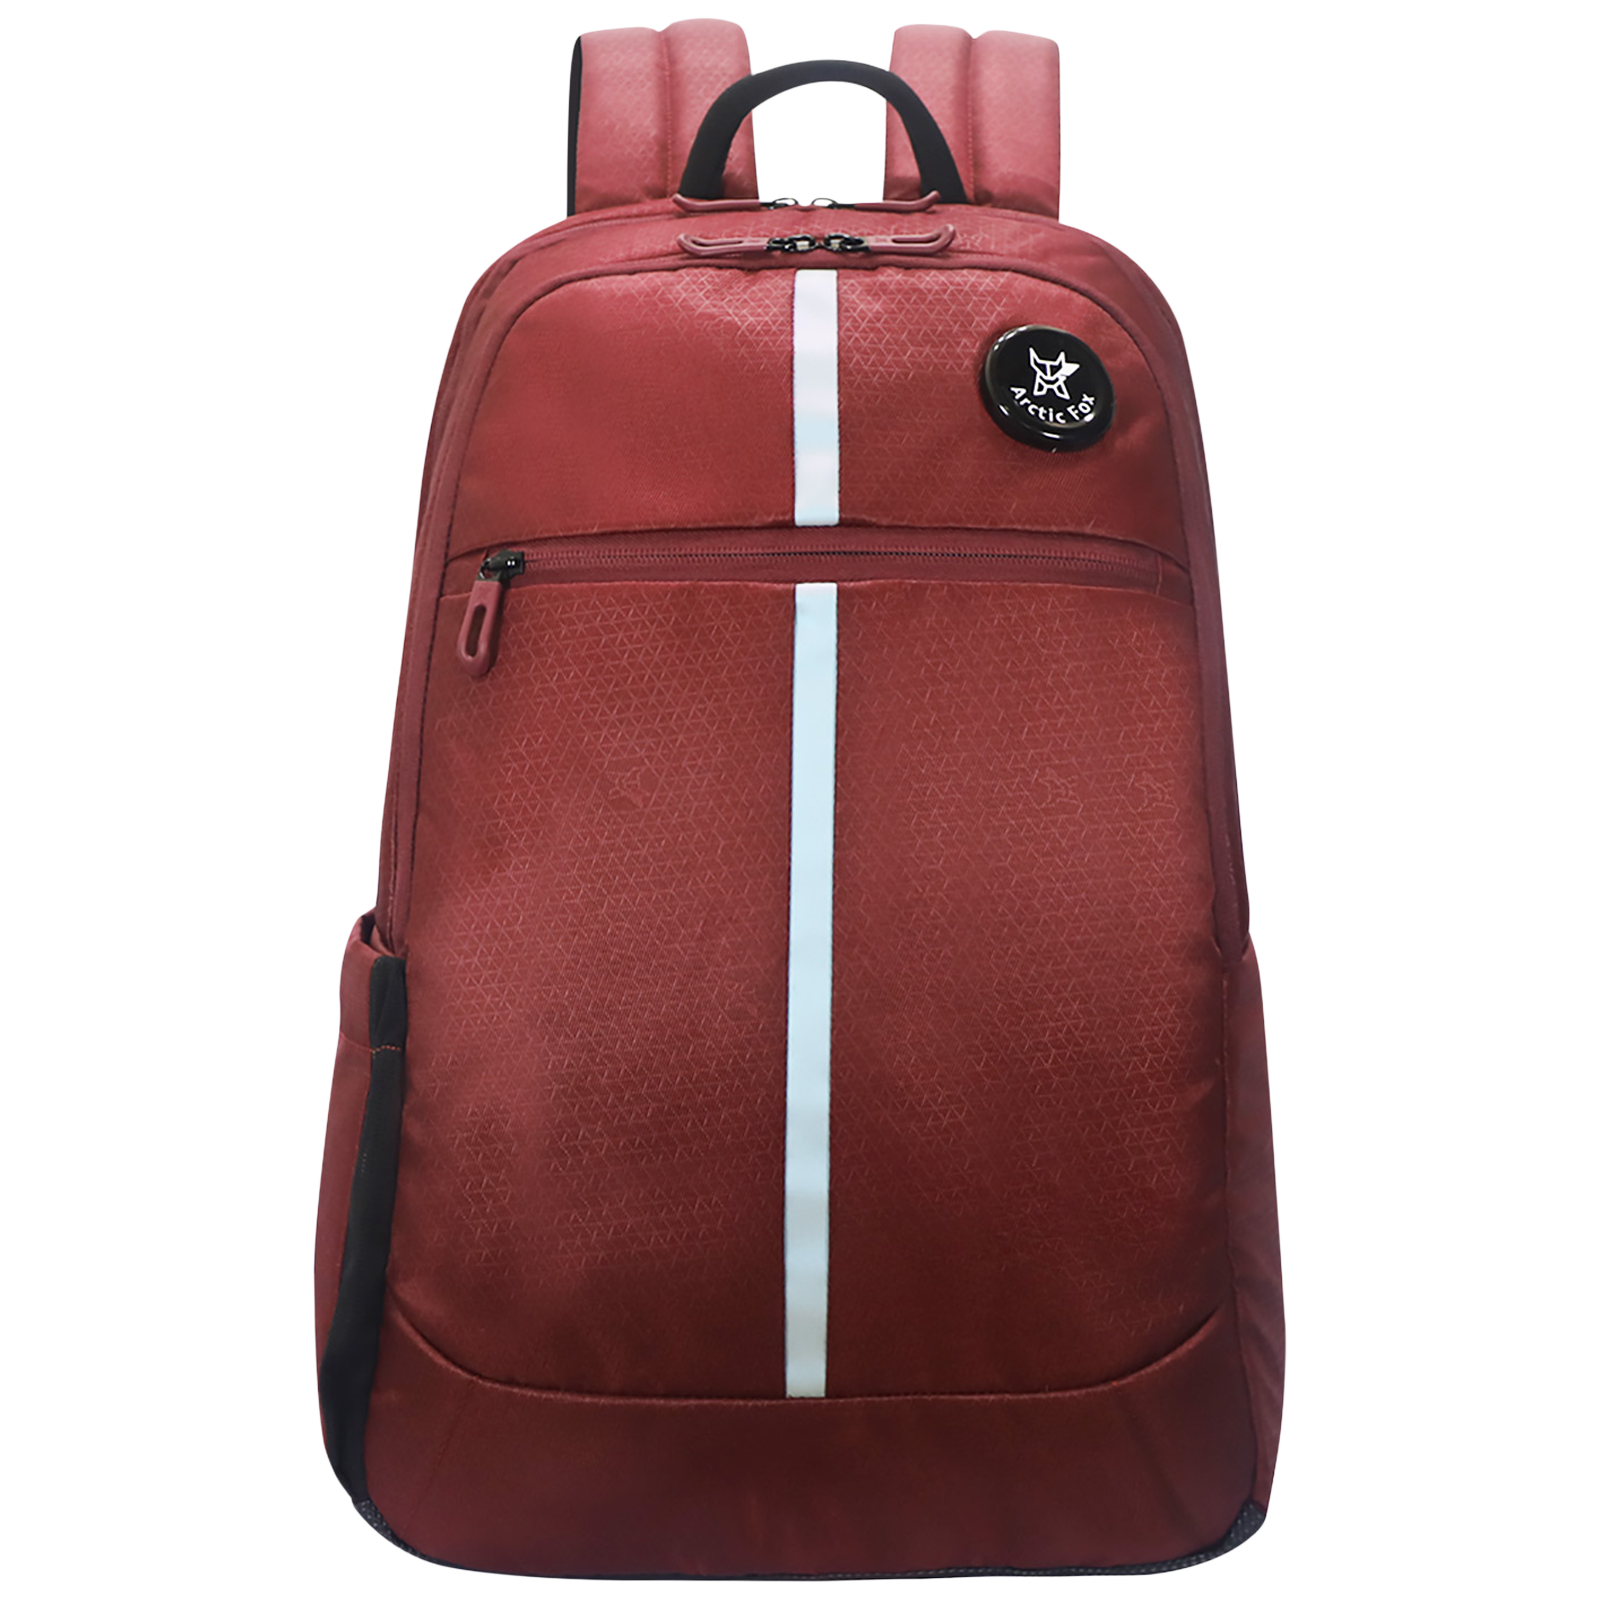 Brown Backpack Transparent PNG